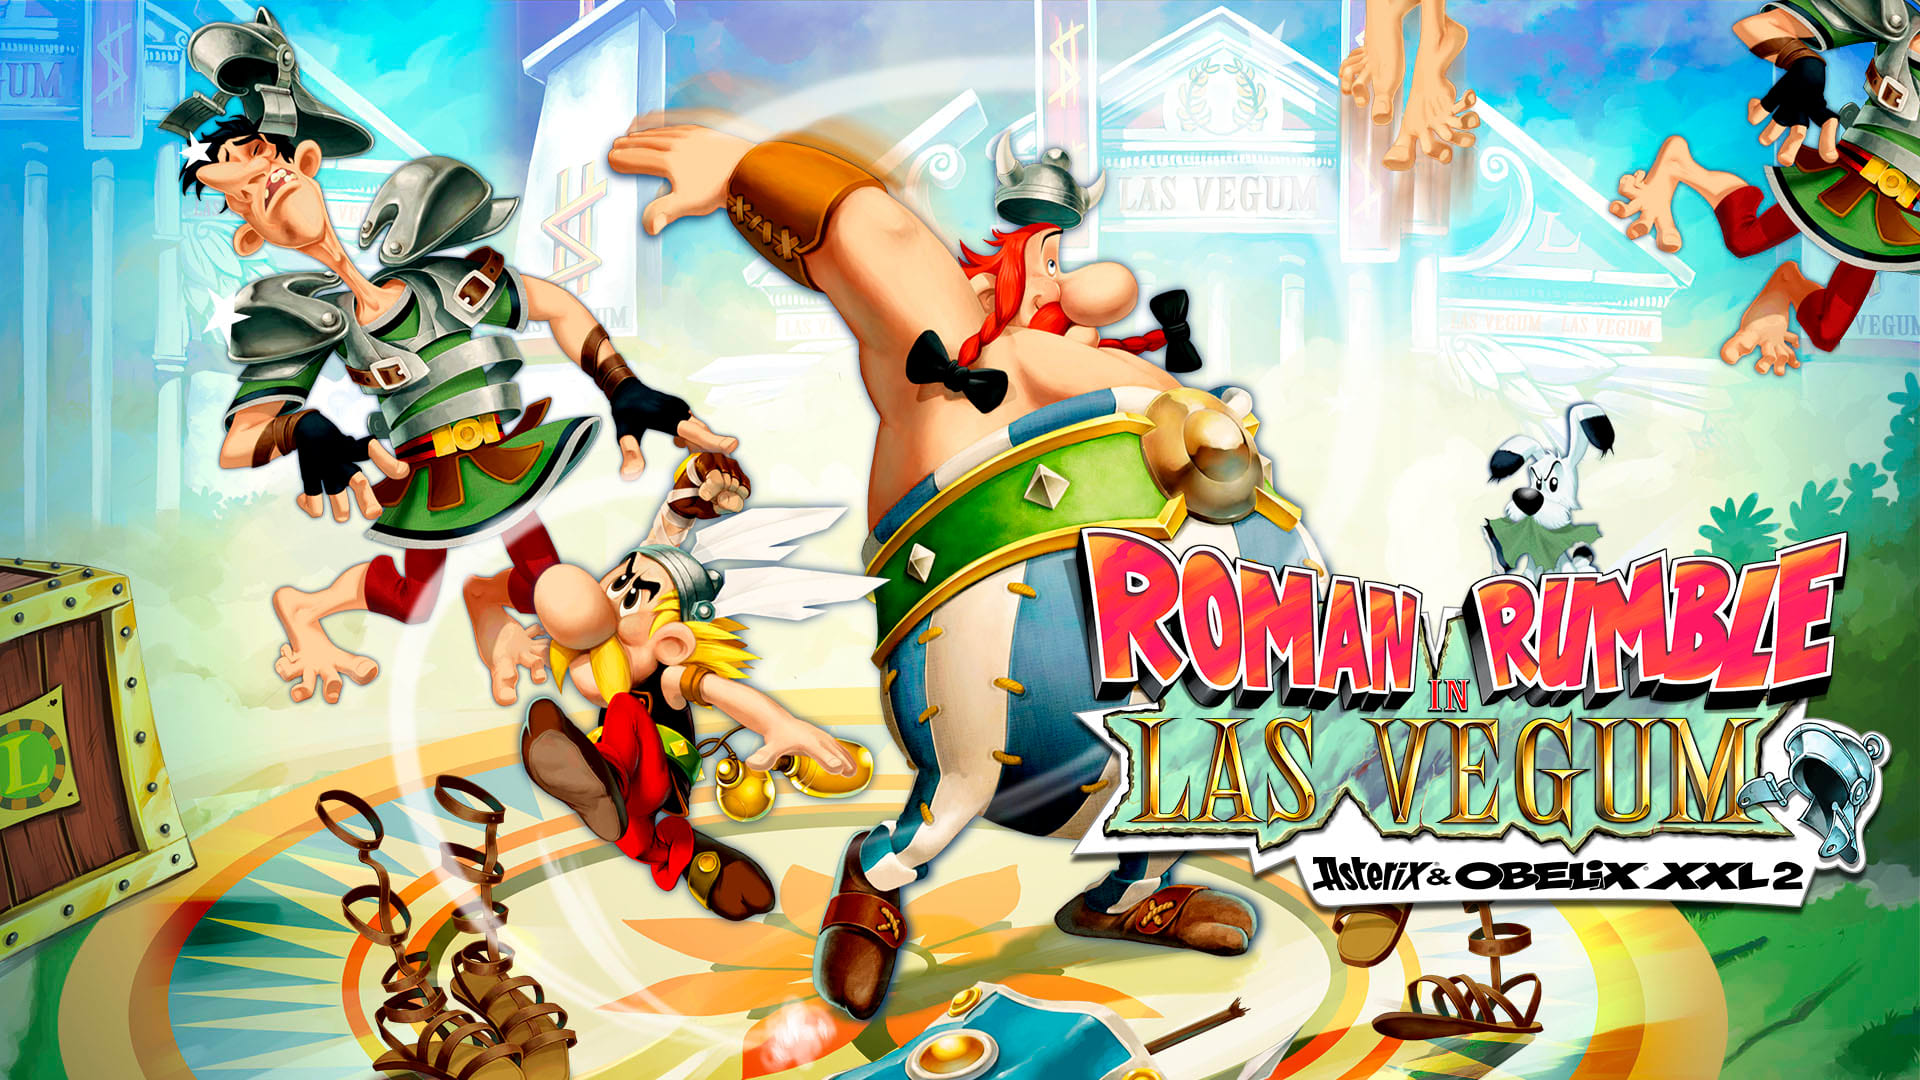 Roman Rumble in Las Vegum - Astérix & Obélix XXL 2 1